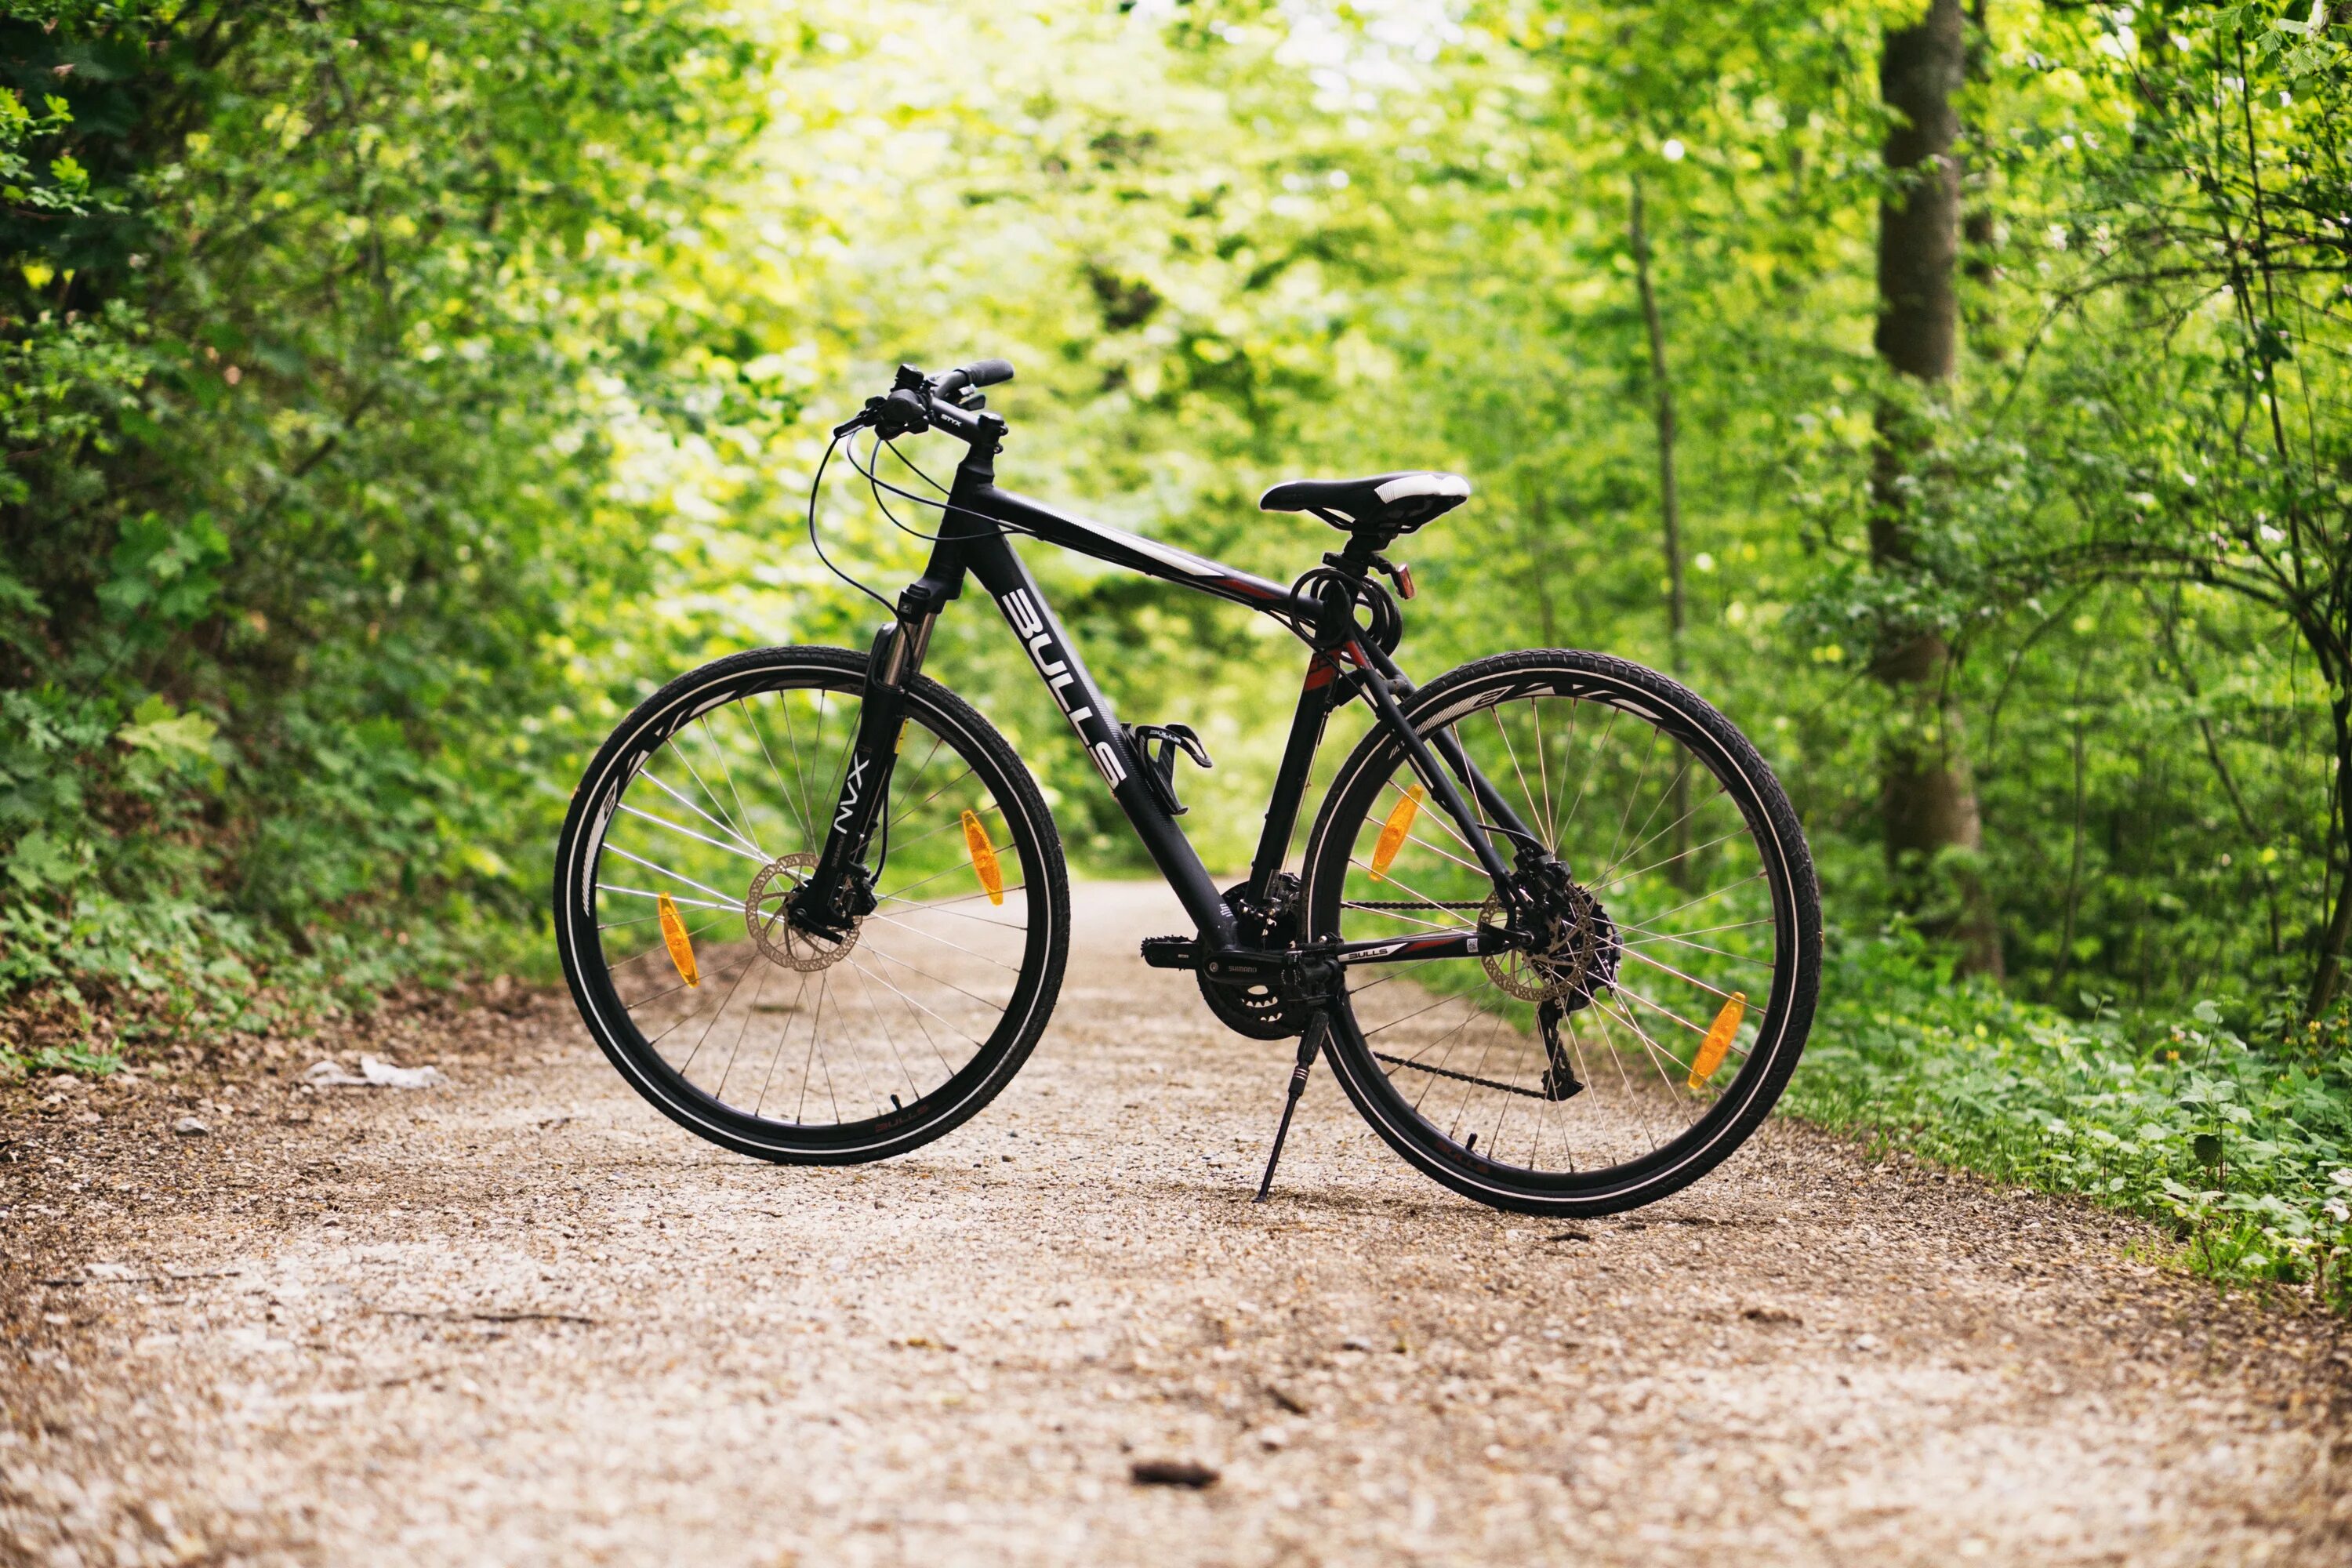 Велосипед geler MTB Bike. Велосипед Horn Forest 27.5. Storck Scenero. Велосипед на фоне природы. Bike сайт